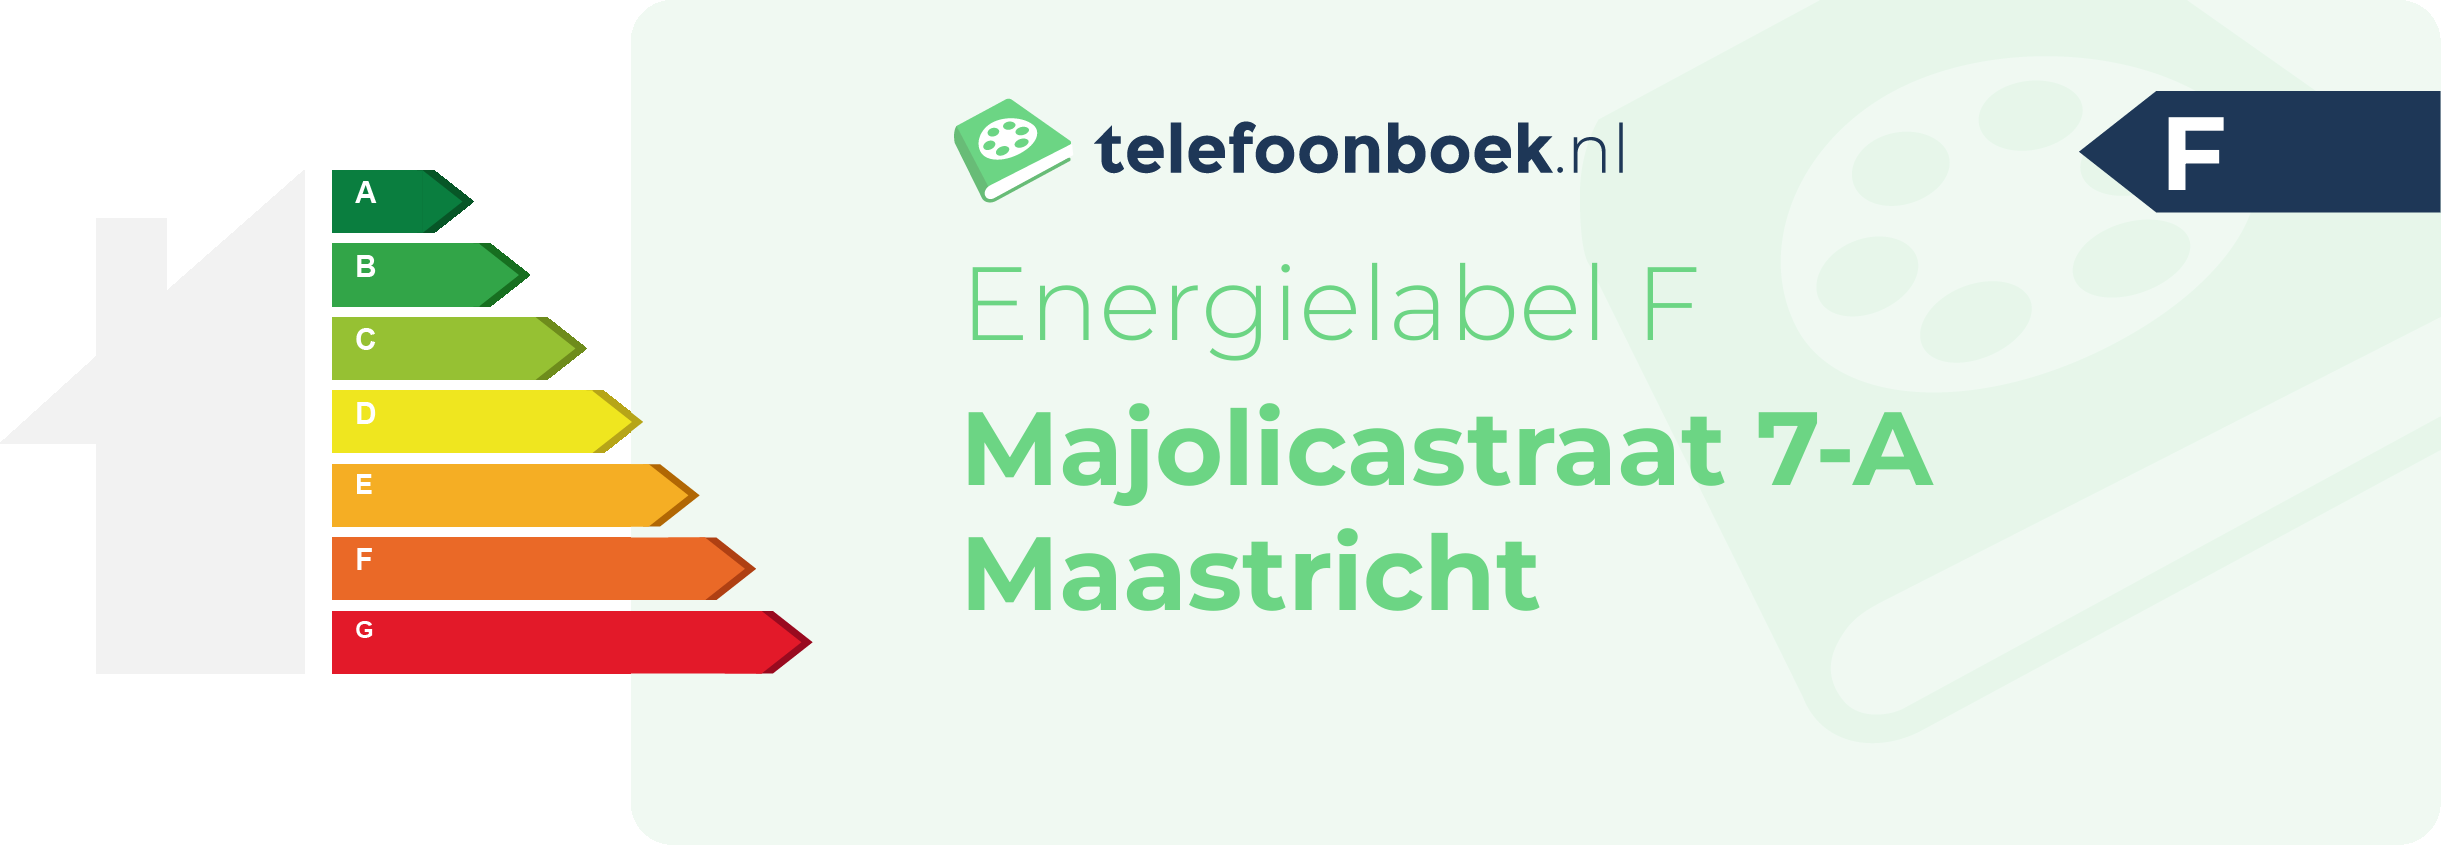 Energielabel Majolicastraat 7-A Maastricht